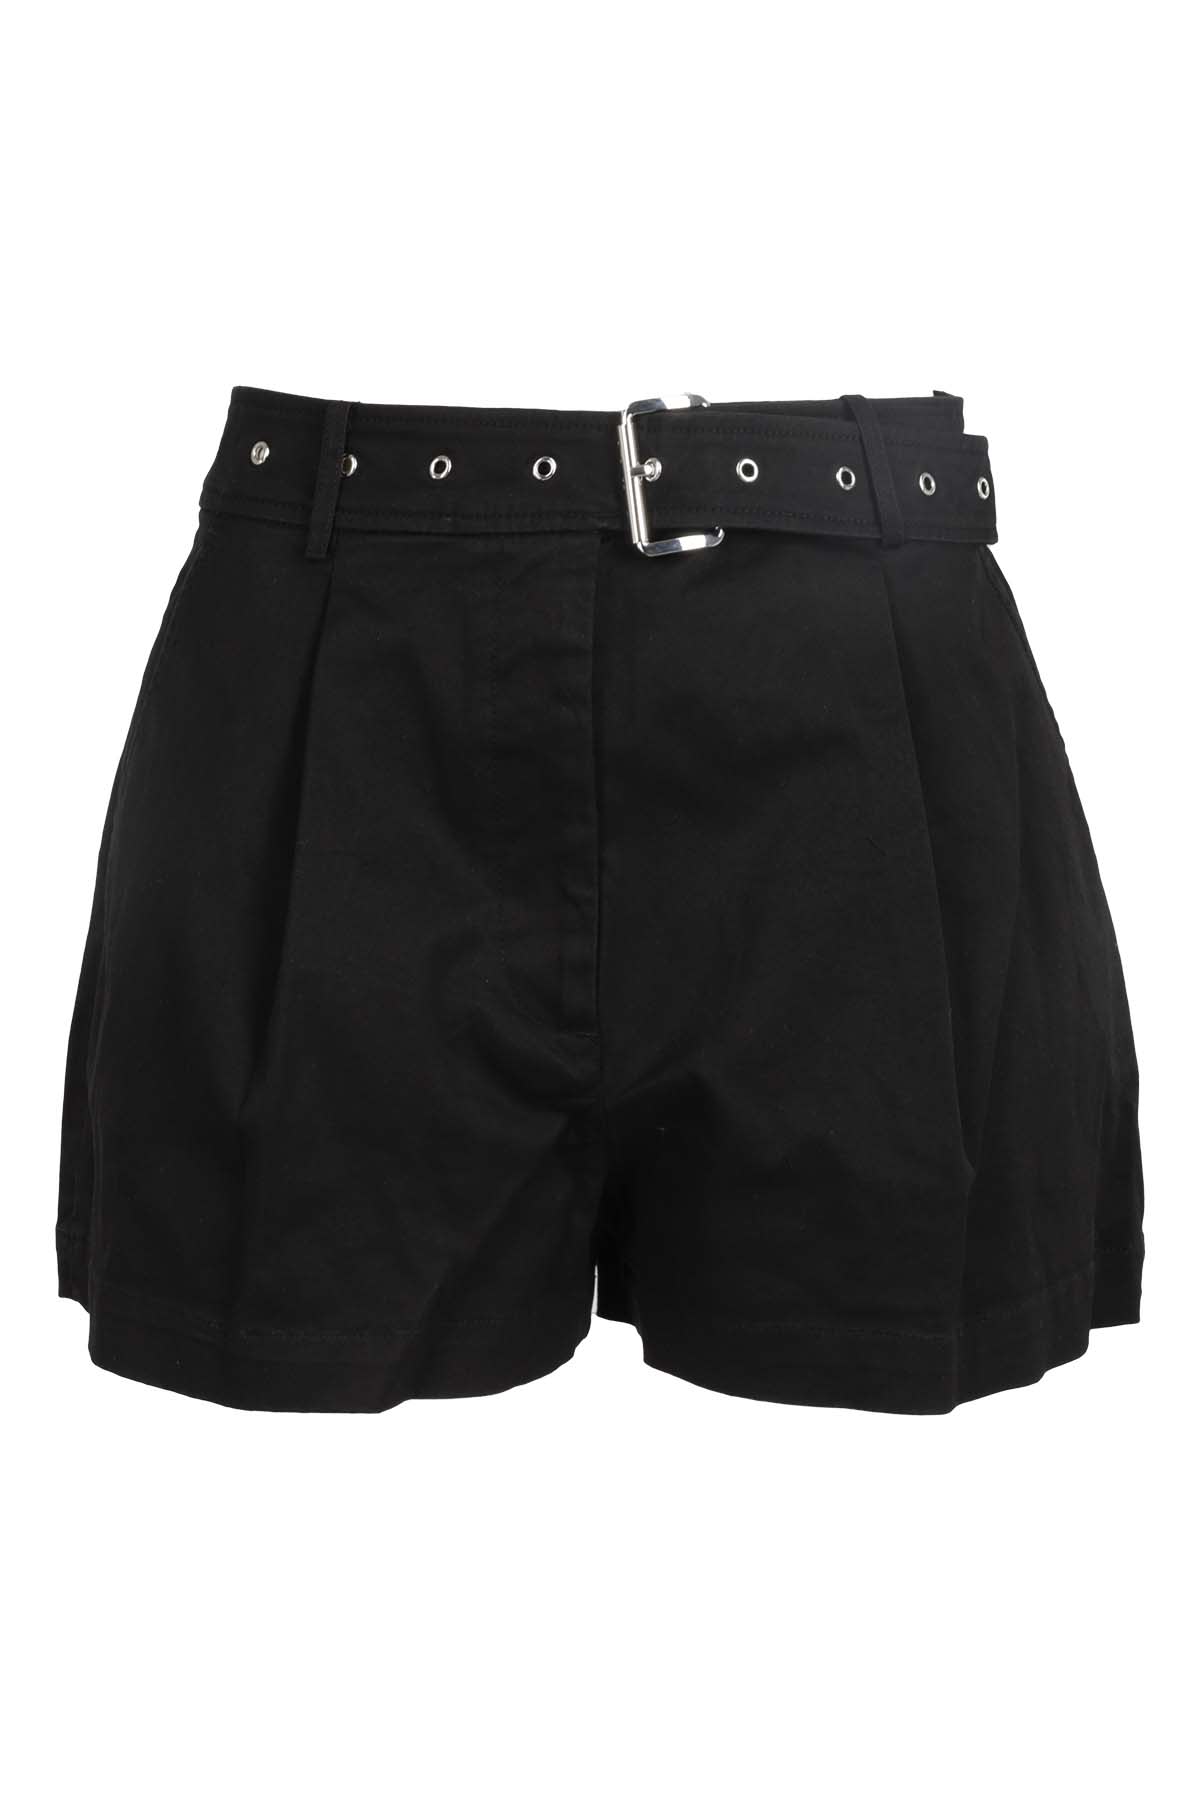 Michael Kors Chino Shorts